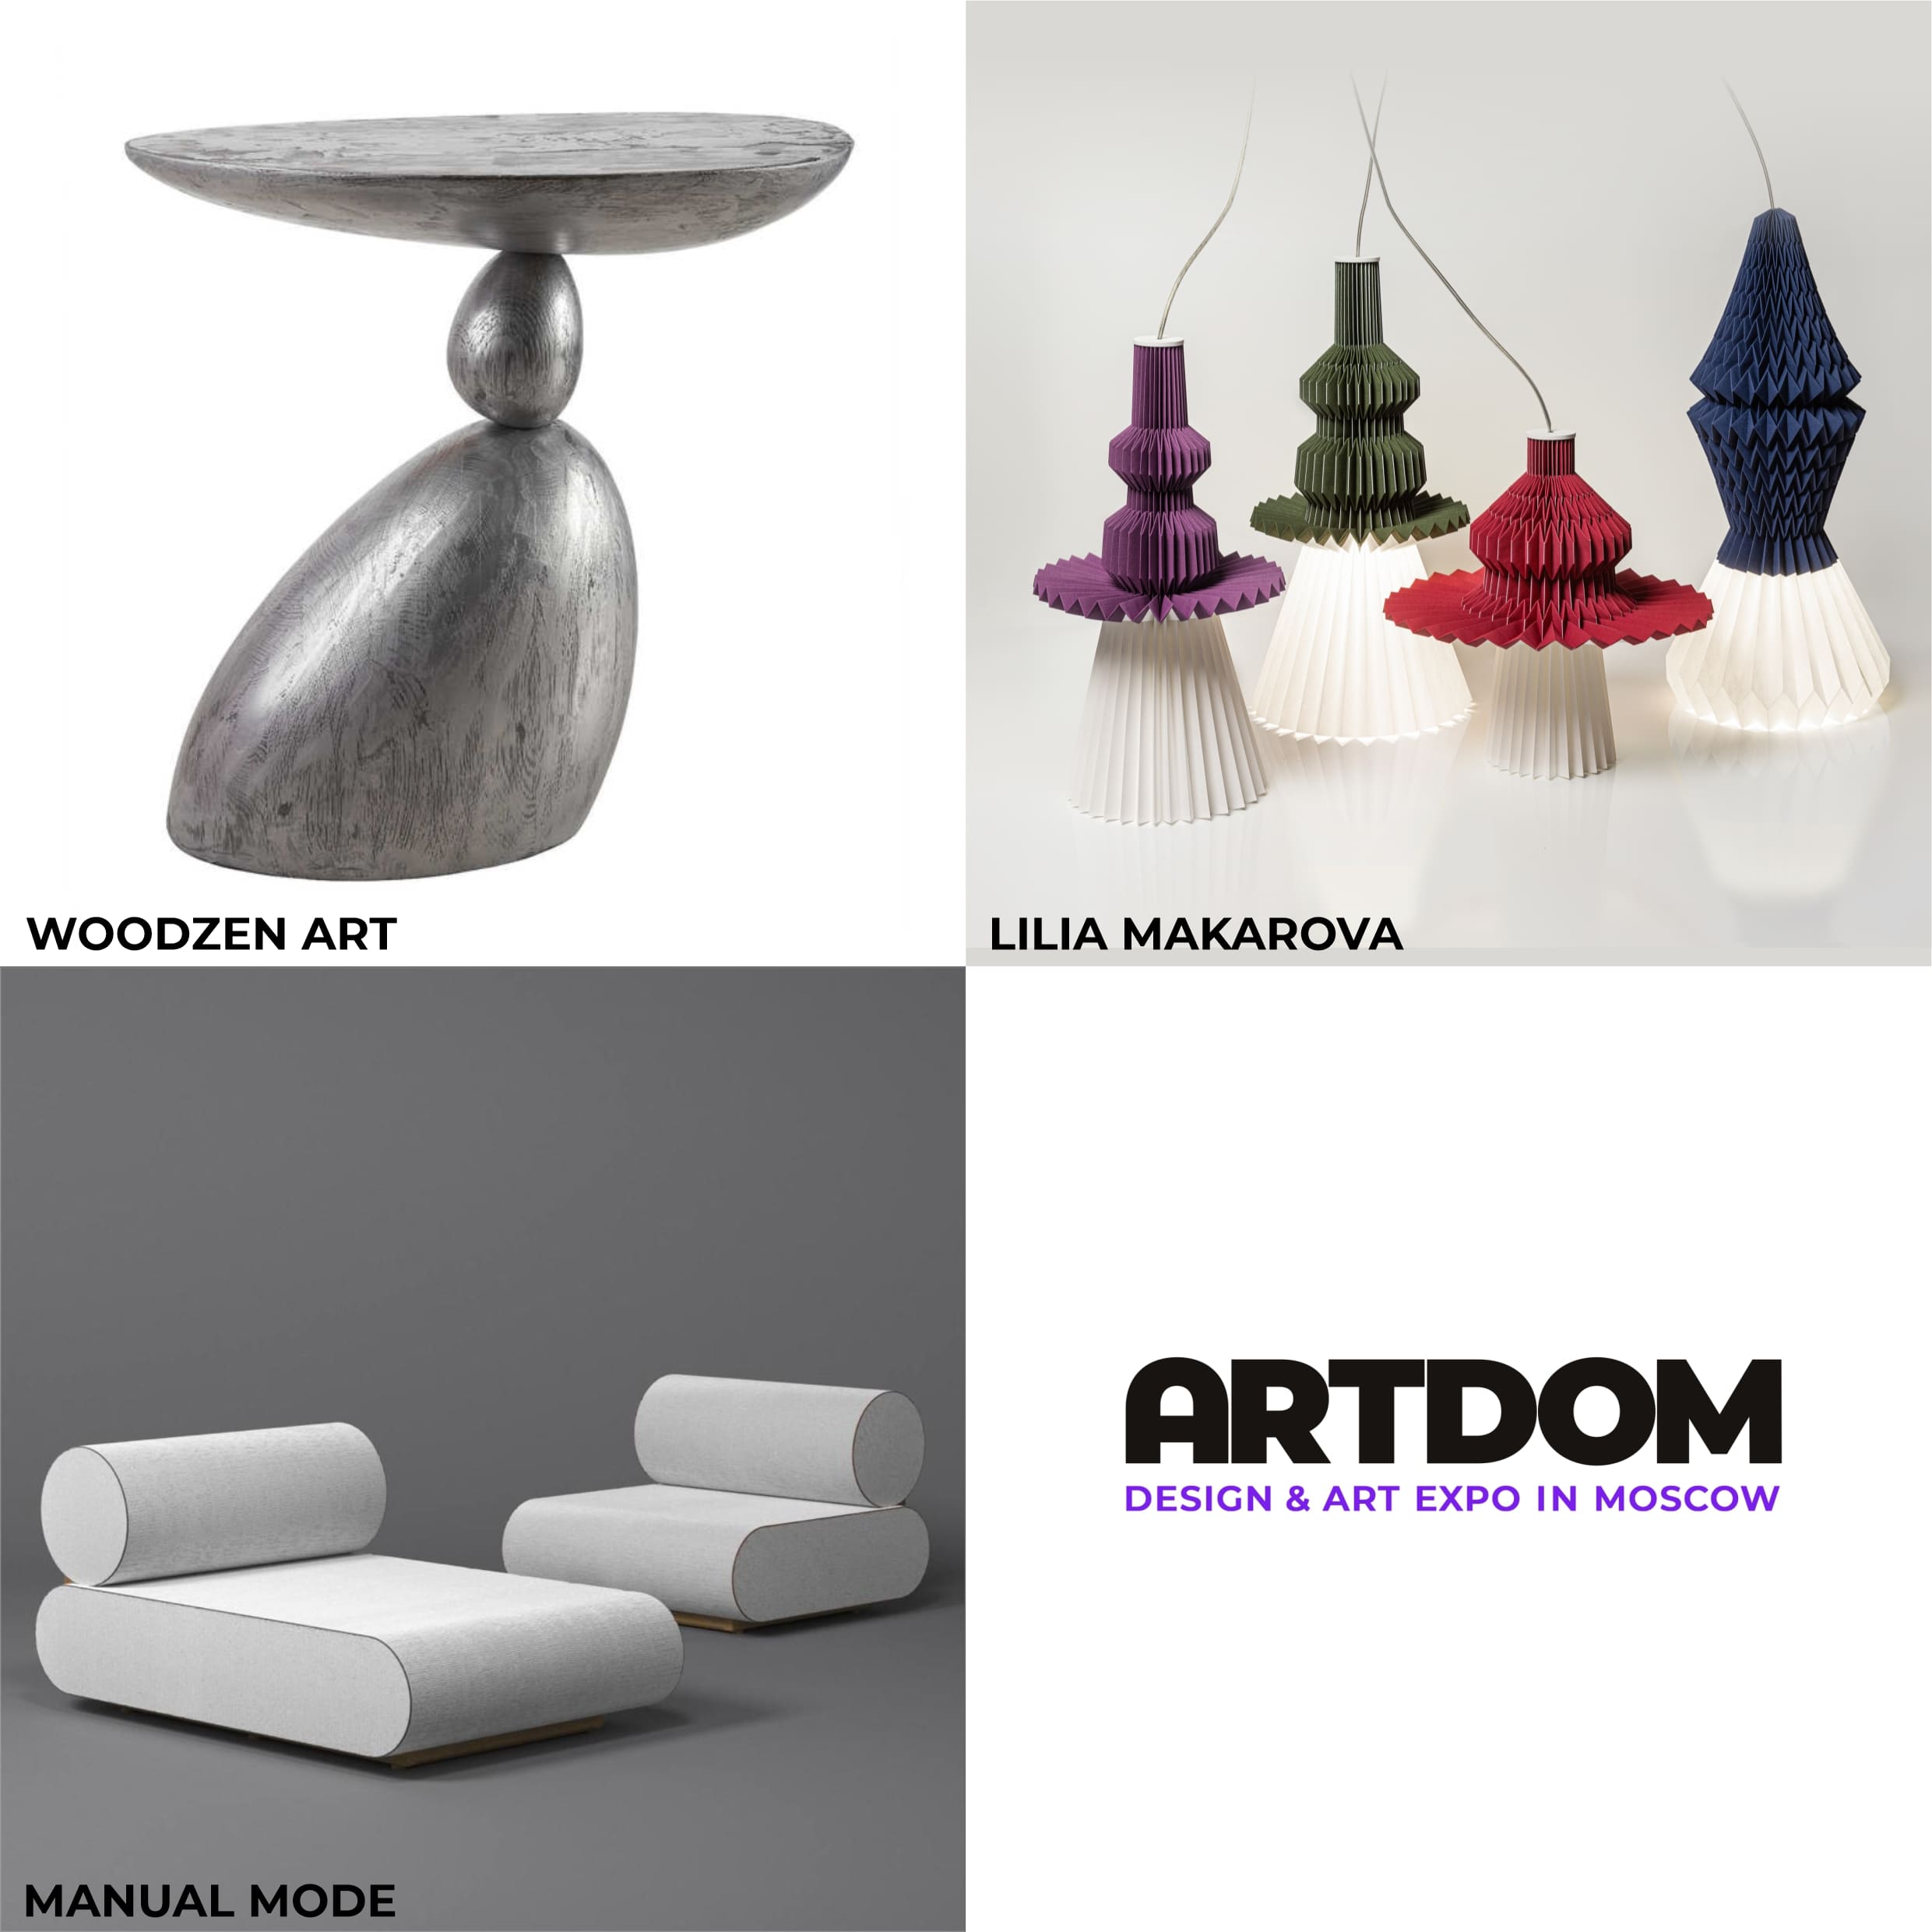 ARTDOM Design & Art Expo